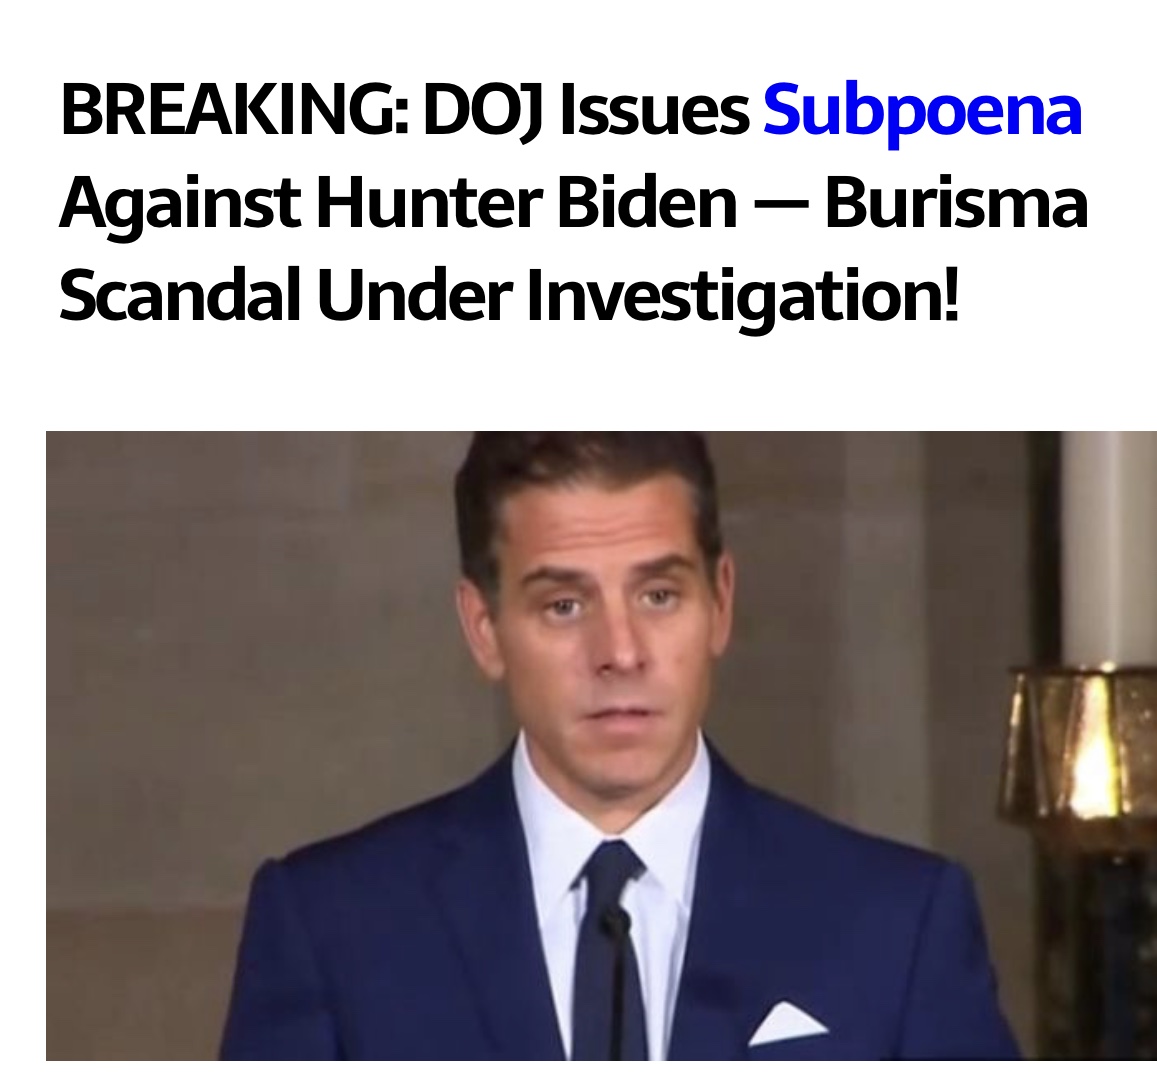 BREAKING NEWS: DOJ Issues Subpoena Against Hunter Biden — Burisma Scandal Under Investigation!